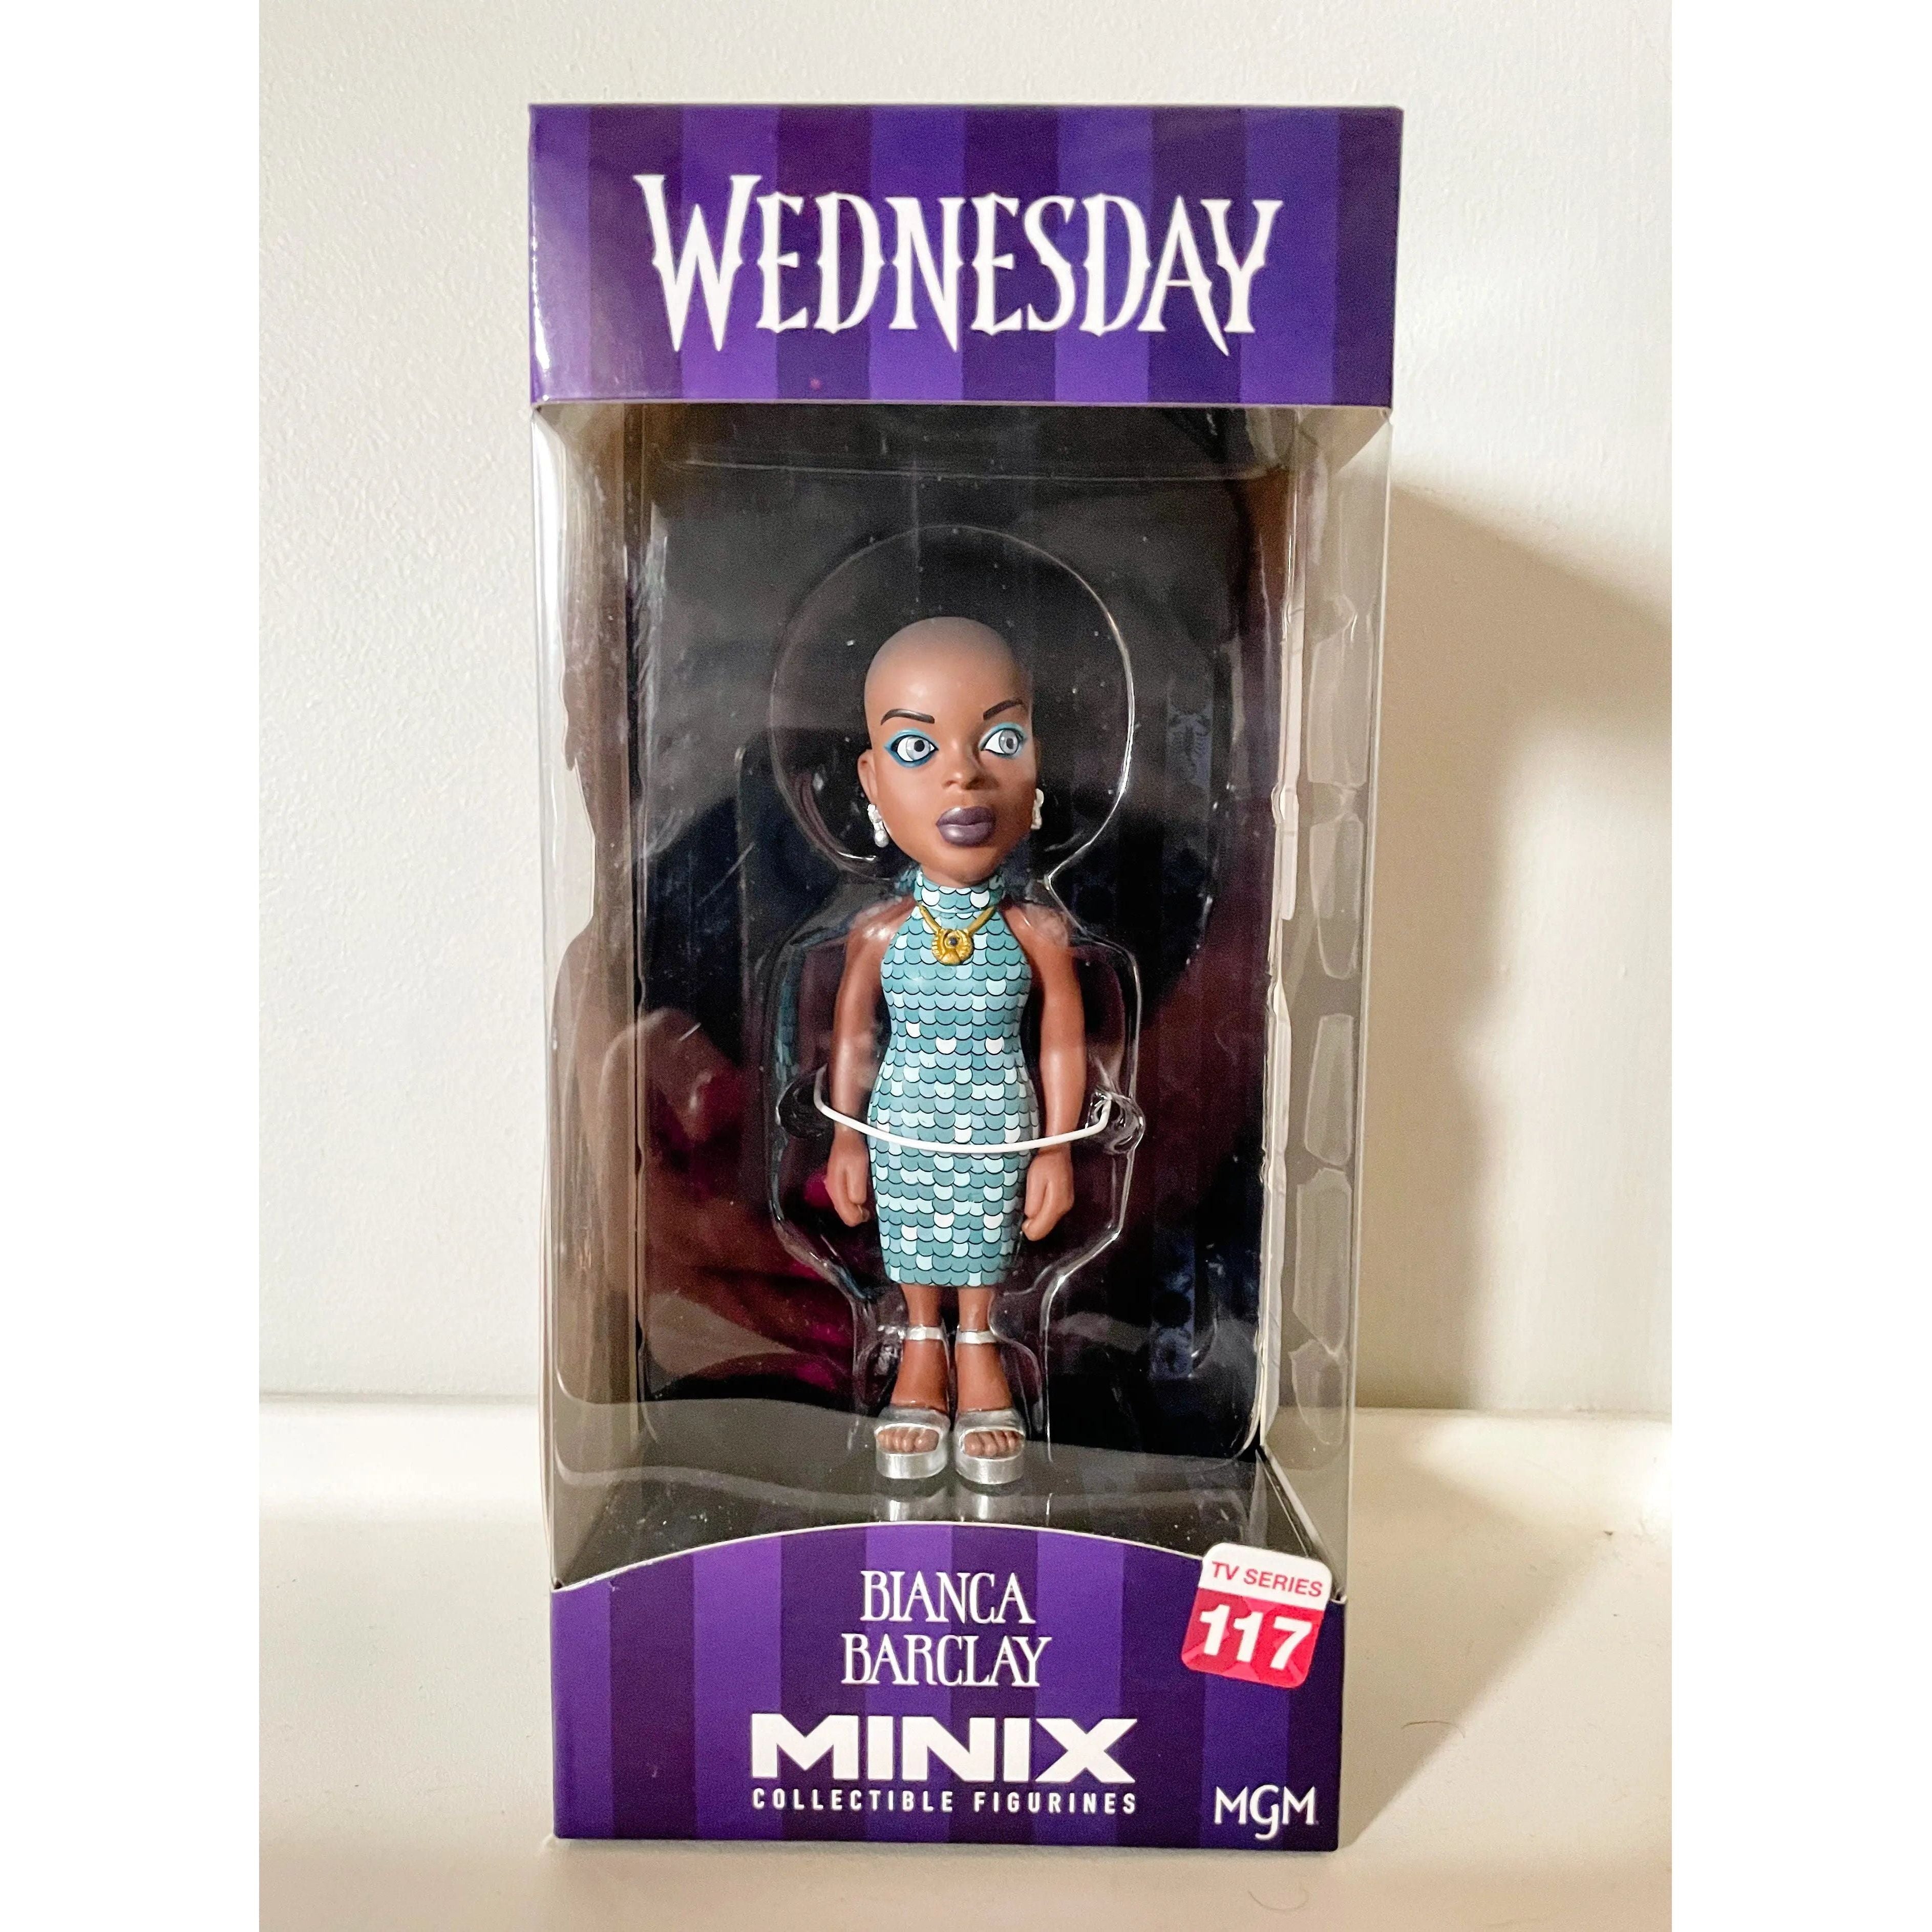 Minix Figure Wednesday - Bianca